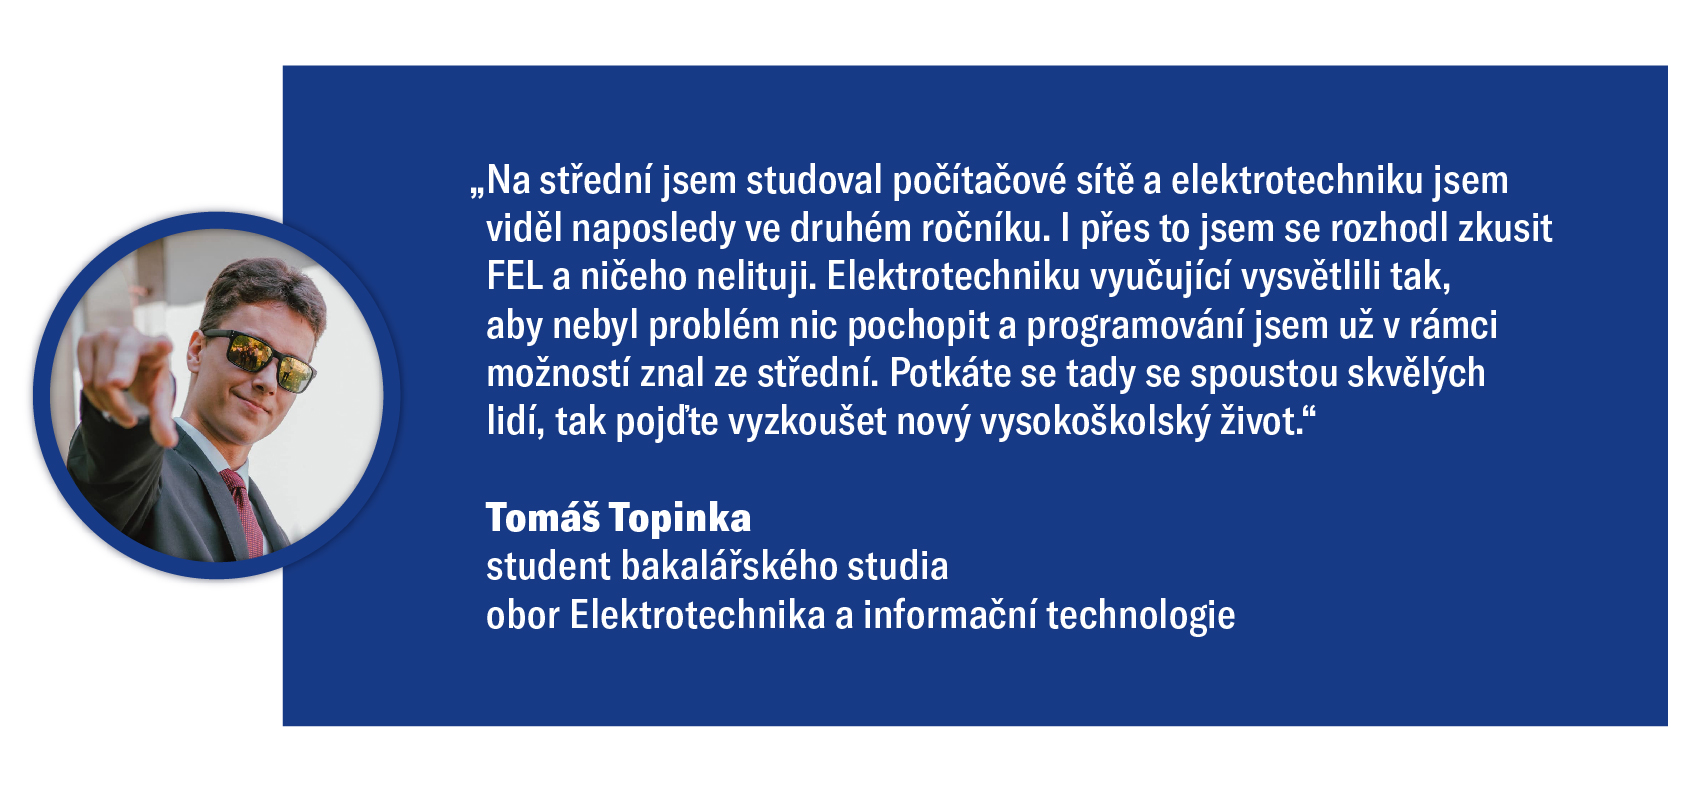 Tomáš Topinka